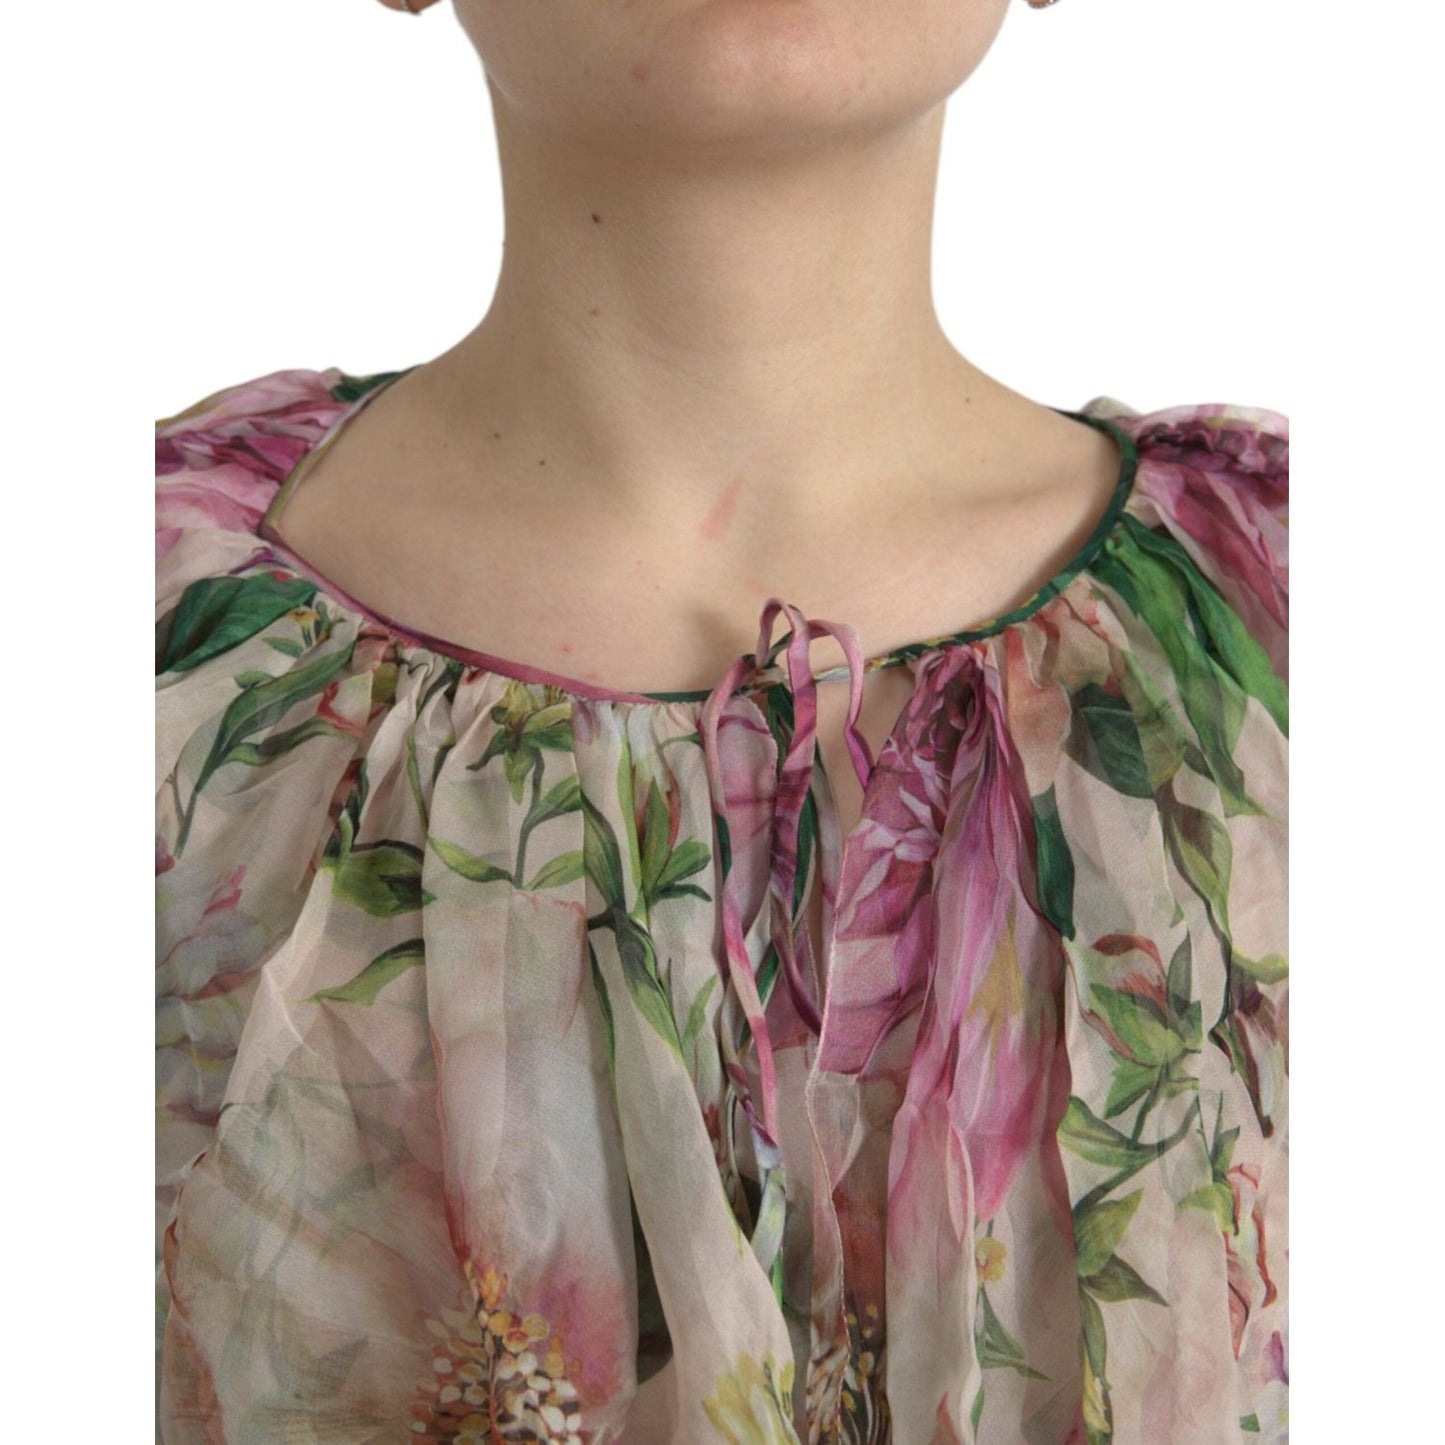 Dolce & Gabbana Multicolor Floral Silk Tiered Long Maxi Dress multicolor-floral-silk-tiered-long-maxi-dress